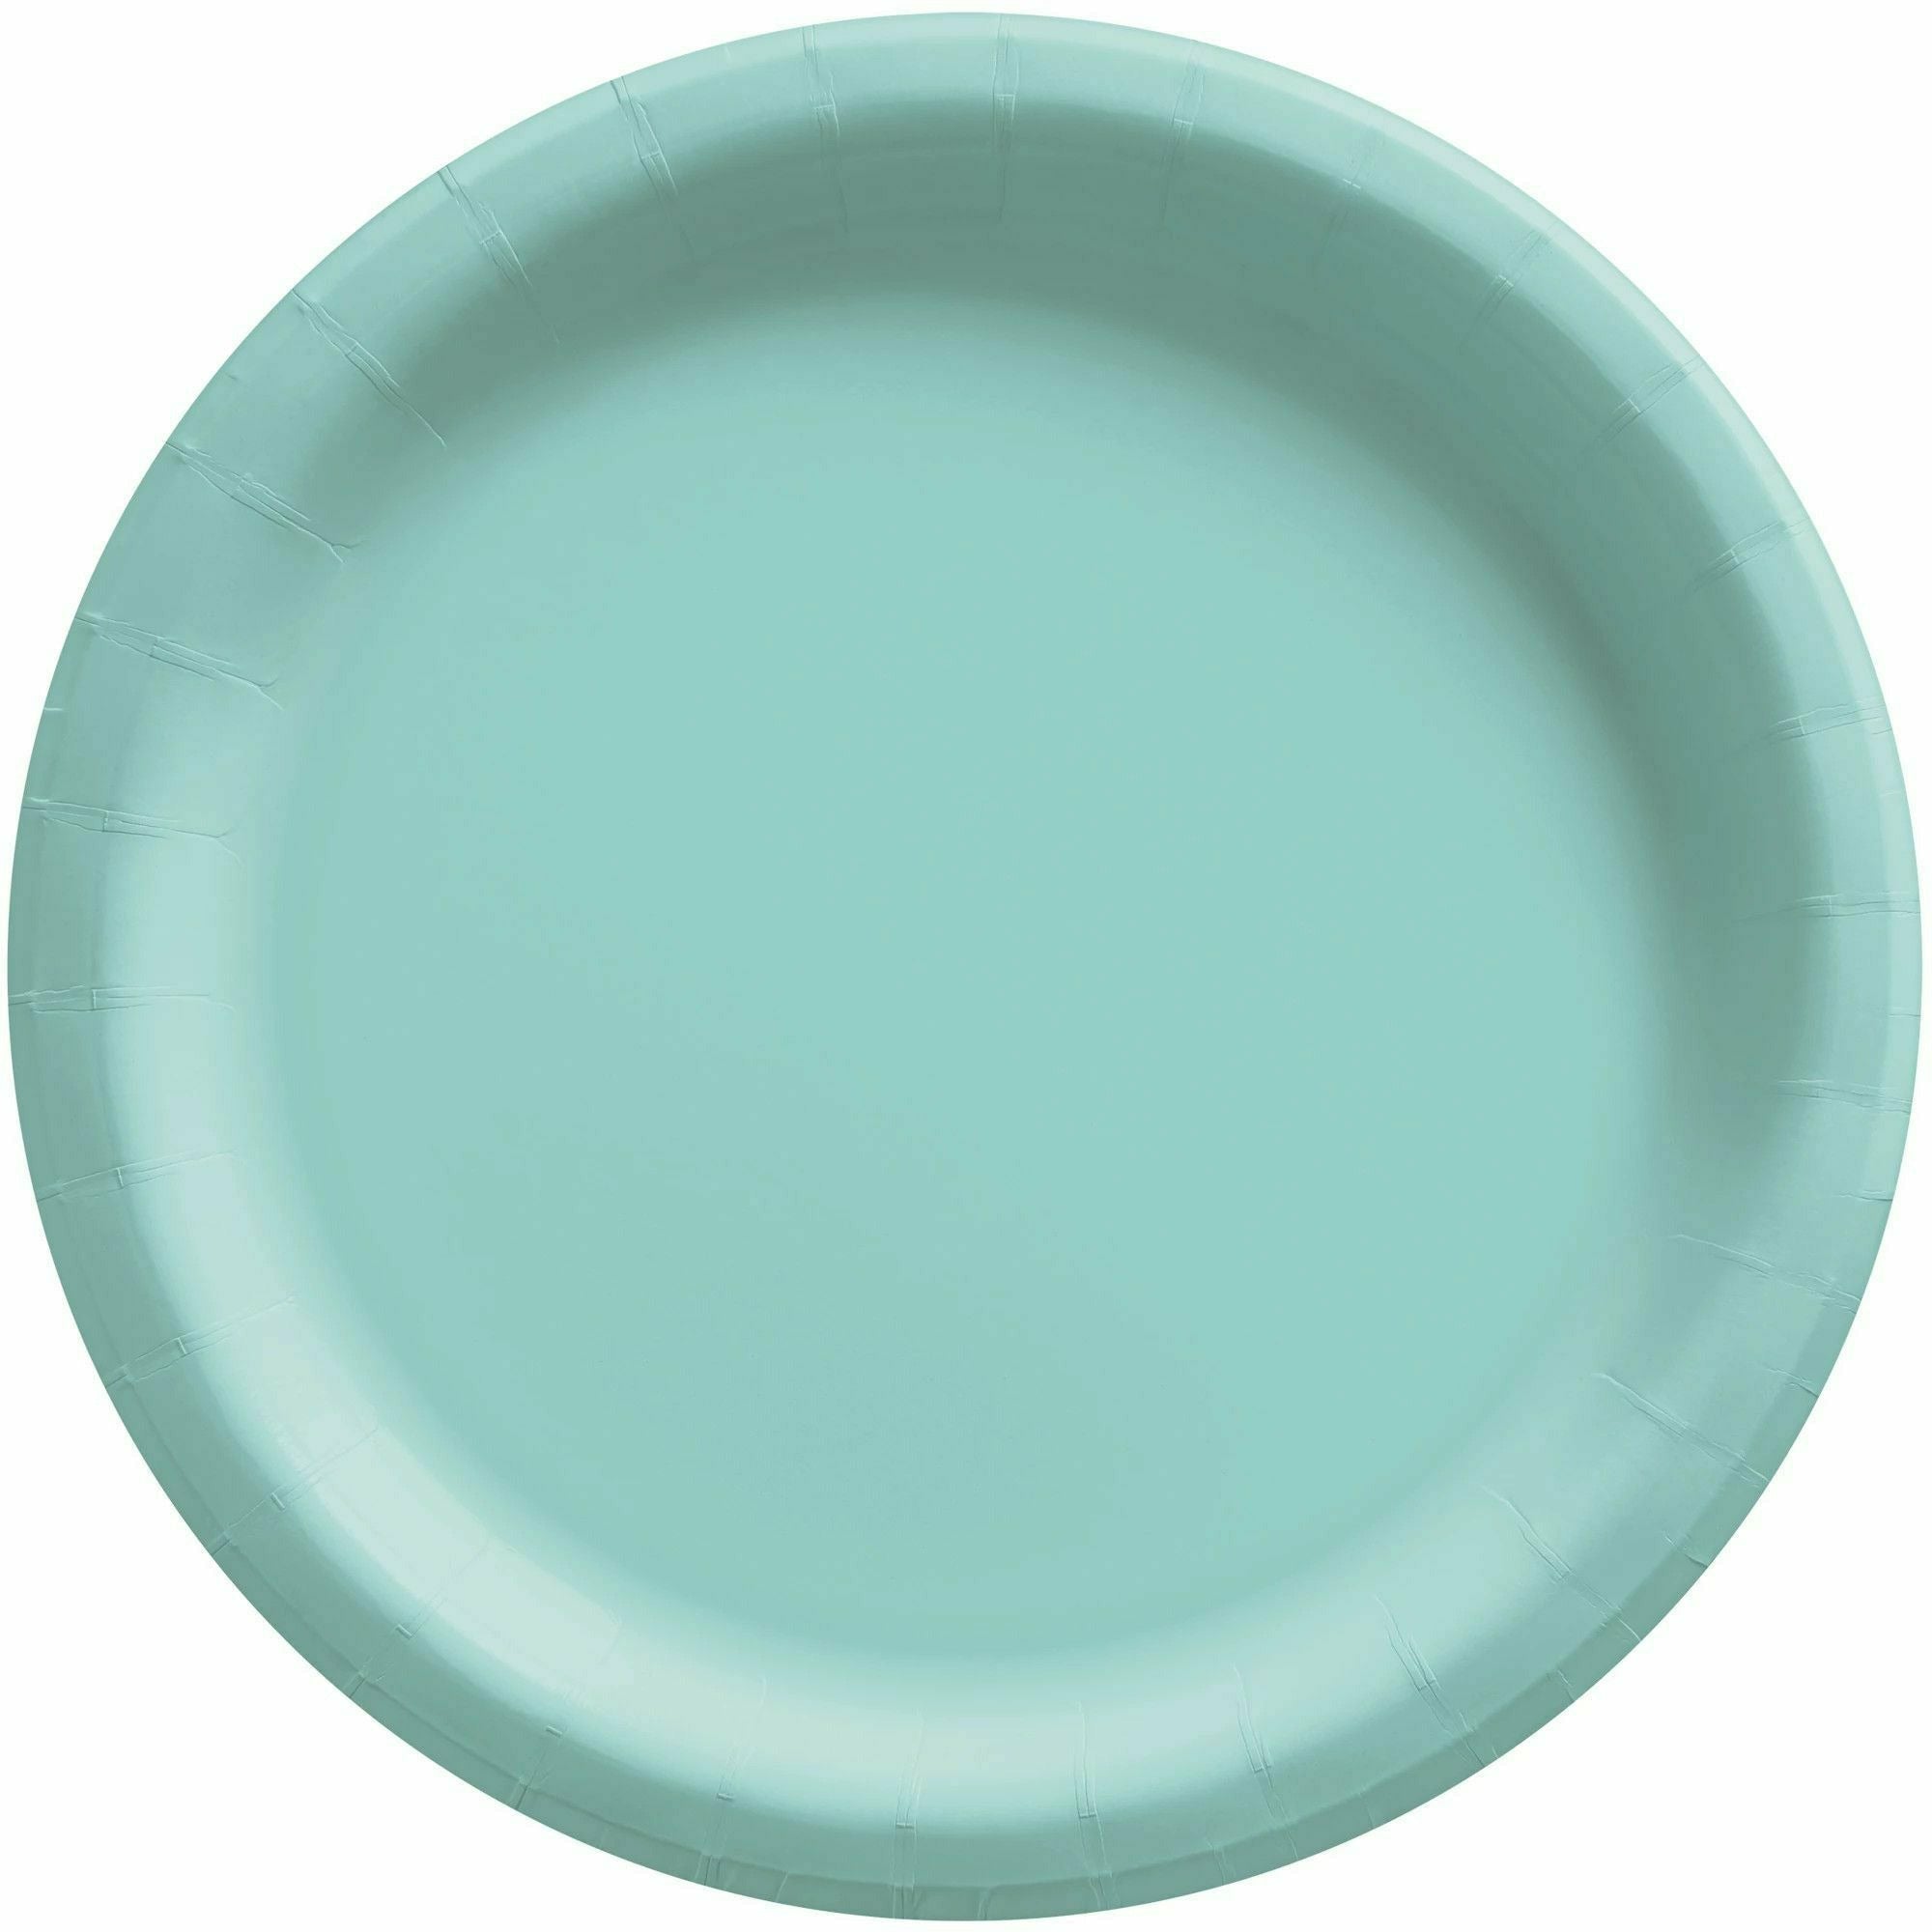 Amscan BASIC Robin's Egg Blue - 6 3/4" Round Paper Plates, 20 Ct.